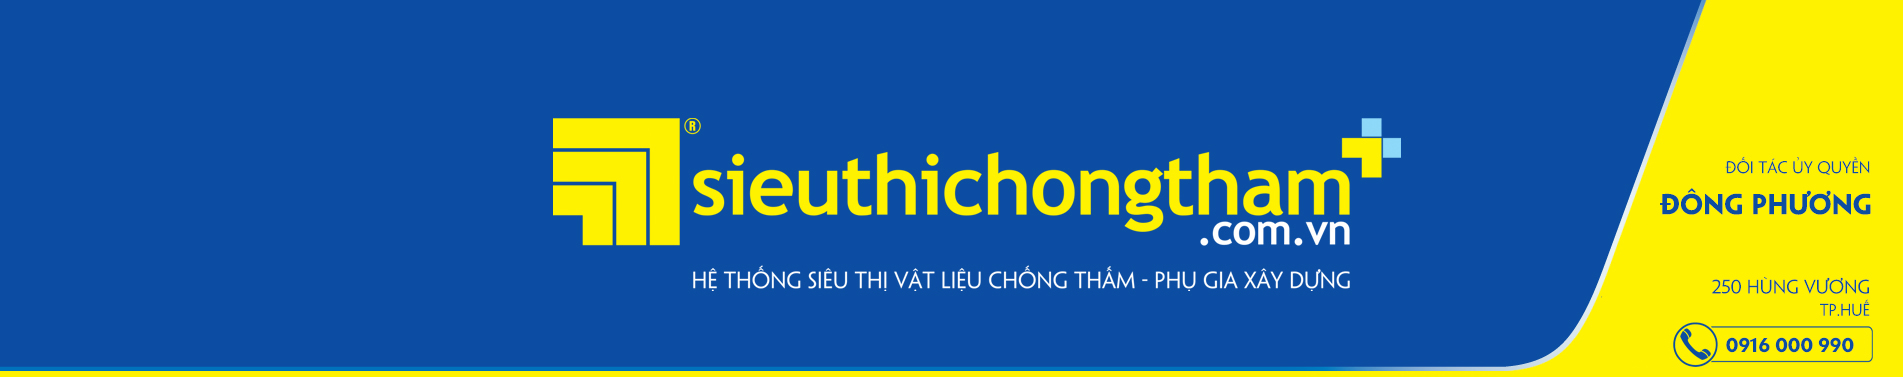 Dong phuong Banner